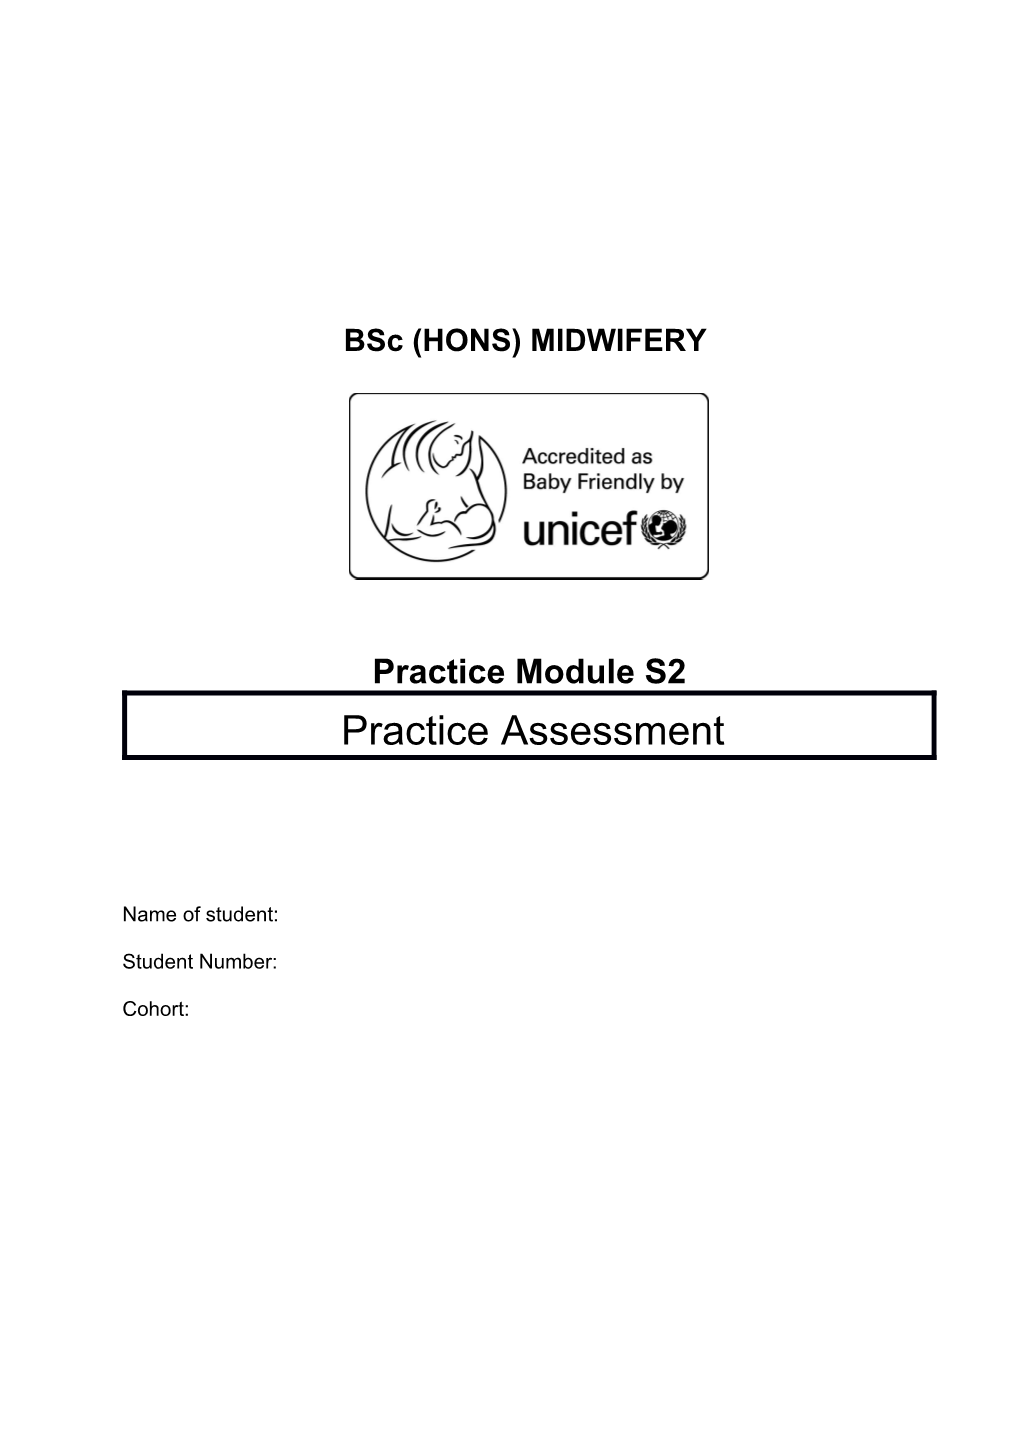 Midwifery Practice Module S2 - Practice Assessment Document